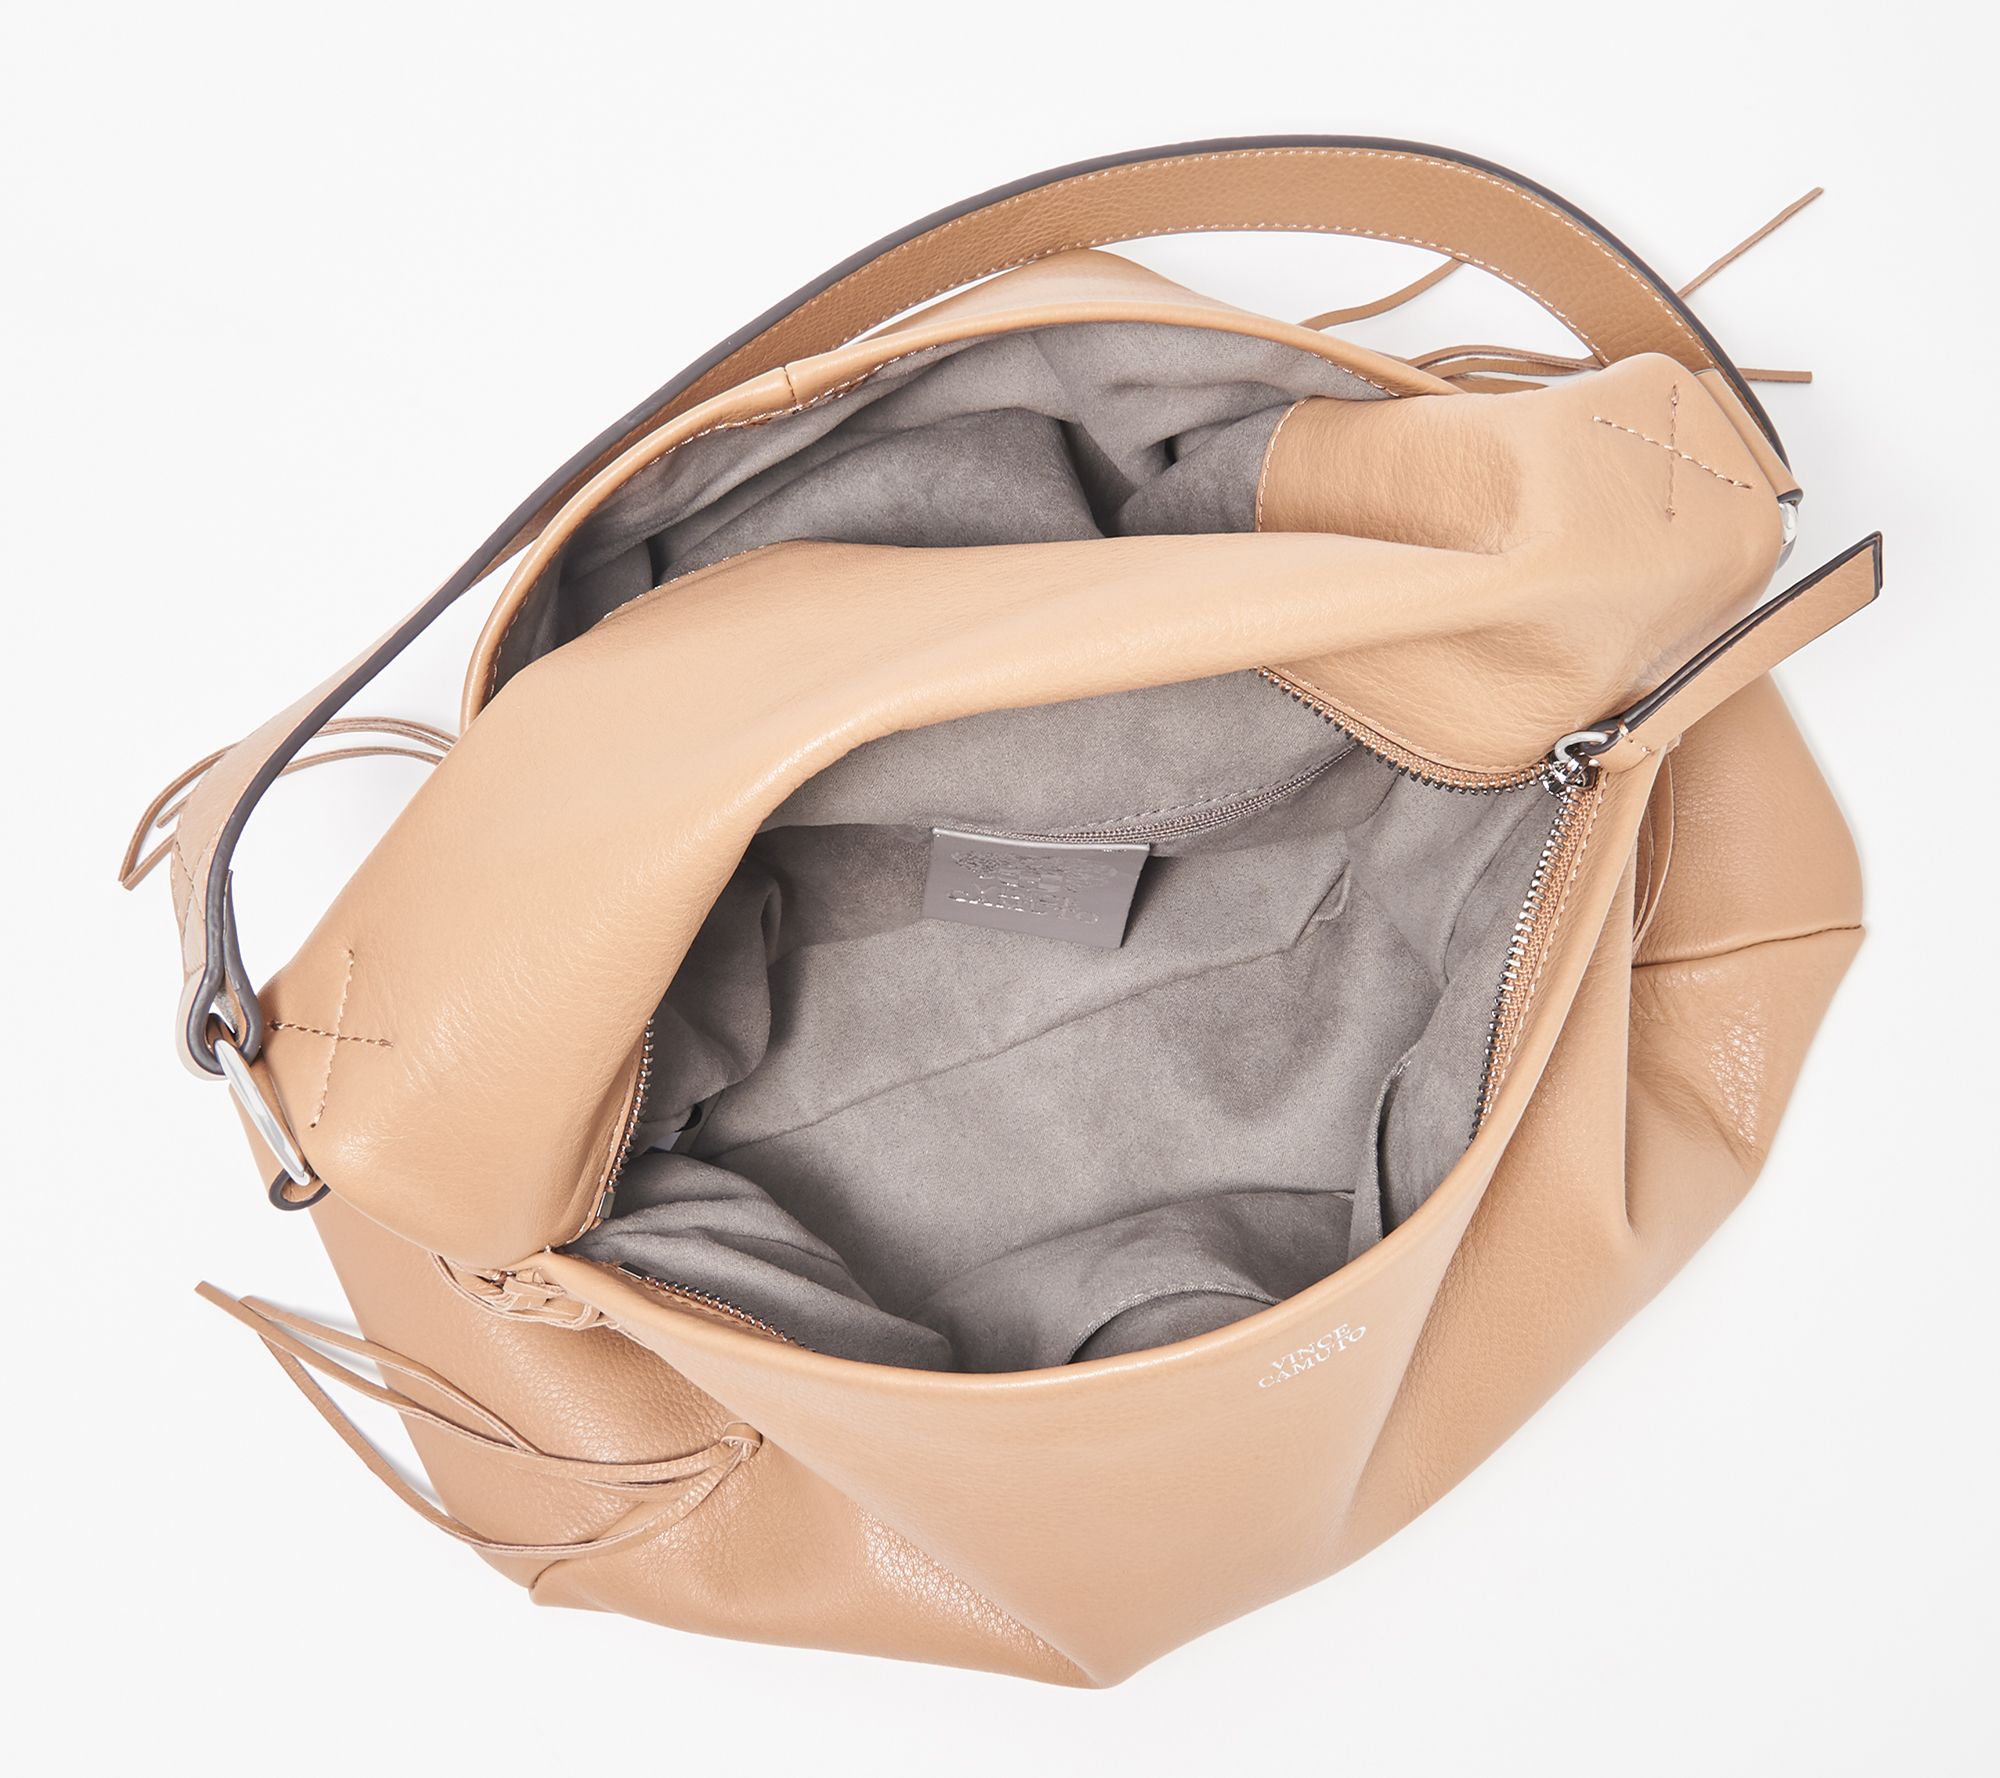 Vince Camuto Pebble Leather Shoulder Bag - Jayde - QVC.com